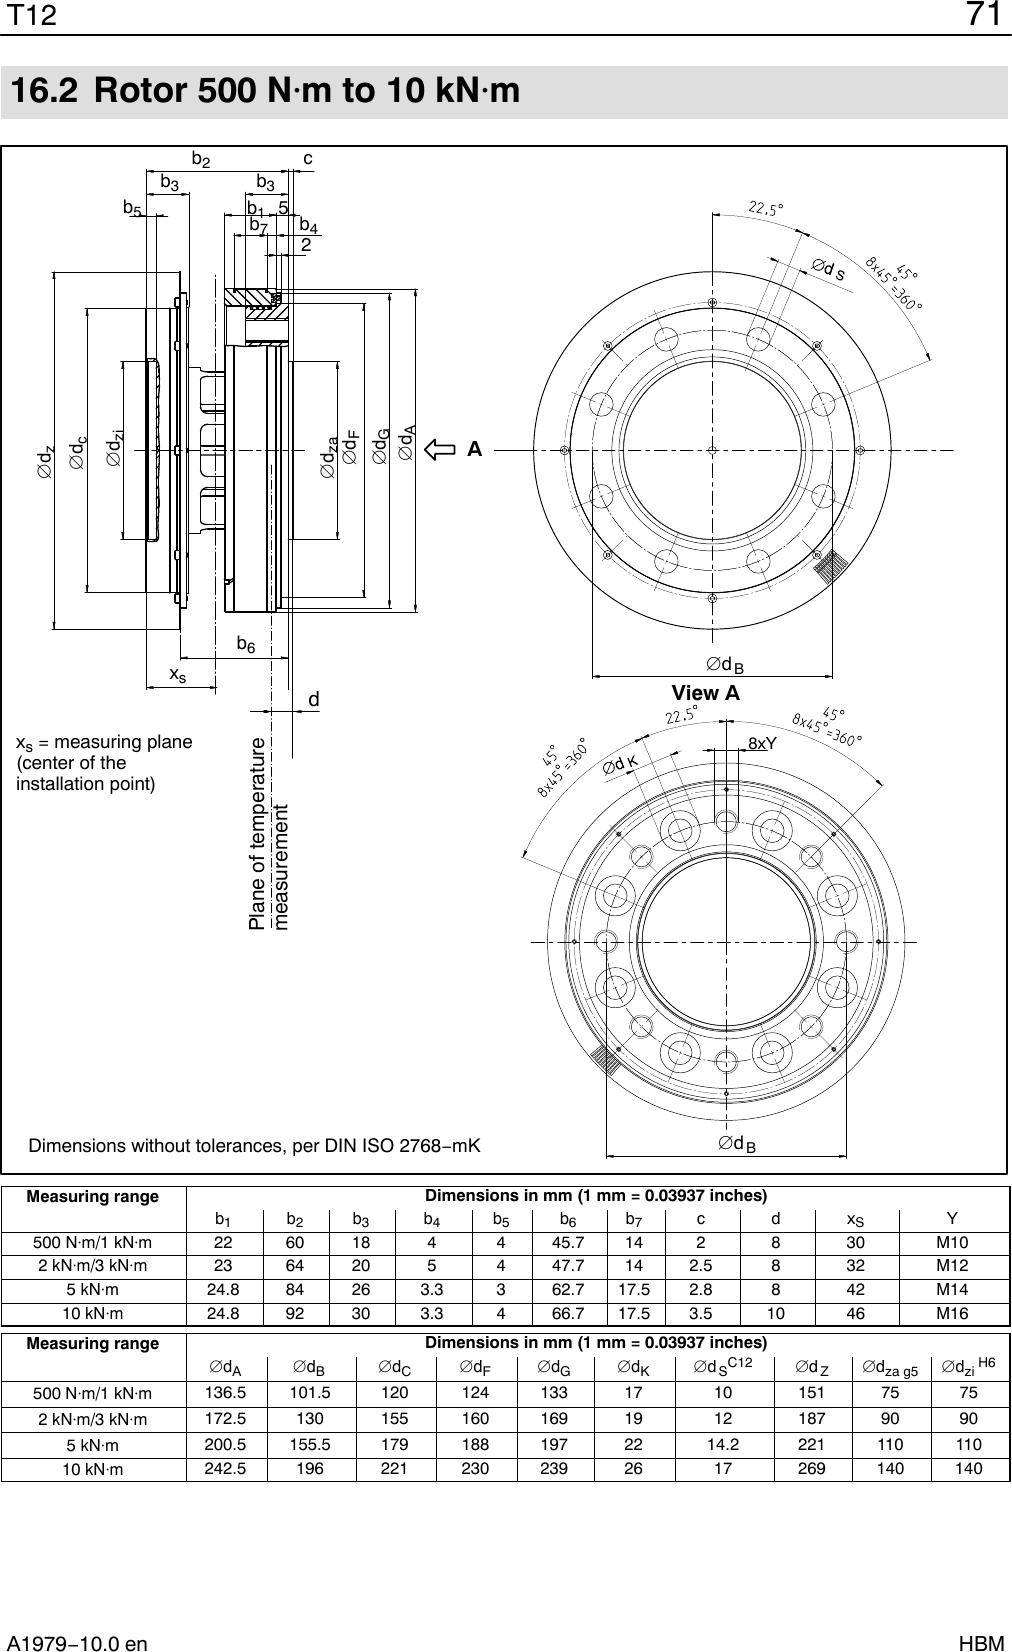 71T12A1979−10.0 en HBM16.2 Rotor 500 NVm to 10 kNVmdzdcdzidzadFdGdAdBdBAView A8xYb2cb3b1b3b5b4b6xsDimensions without tolerances, per DIN ISO 2768−mK5b72Plane of temperaturemeasurementdxs = measuring plane(center of theinstallation point)Measuring range Dimensions in mm (1 mm = 0.03937 inches)b1b2b3b4b5b6b7c d xSY500 Nm/1 kNm 22 60 18 4 4 45.7 14 2 8 30 M102 kNm/3 kNm 23 64 20 5 4 47.7 14 2.5 8 32 M125 kNm 24.8 84 26 3.3 3 62.7 17.5 2.8 8 42 M1410 kNm 24.8 92 30 3.3 4 66.7 17.5 3.5 10 46 M16Measuring range Dimensions in mm (1 mm = 0.03937 inches)dAdBdCdFdGdKdSC12 dZdza g5 dzi H6500 Nm/1 kNm136.5 101.5 120 124 133 17 10 151 75 752 kNm/3 kNm172.5 130 155 160 169 19 12 187 90 905 kNm200.5 155.5 179 188 197 22 14.2 221 110 11010 kNm242.5 196 221 230 239 26 17 269 140 140